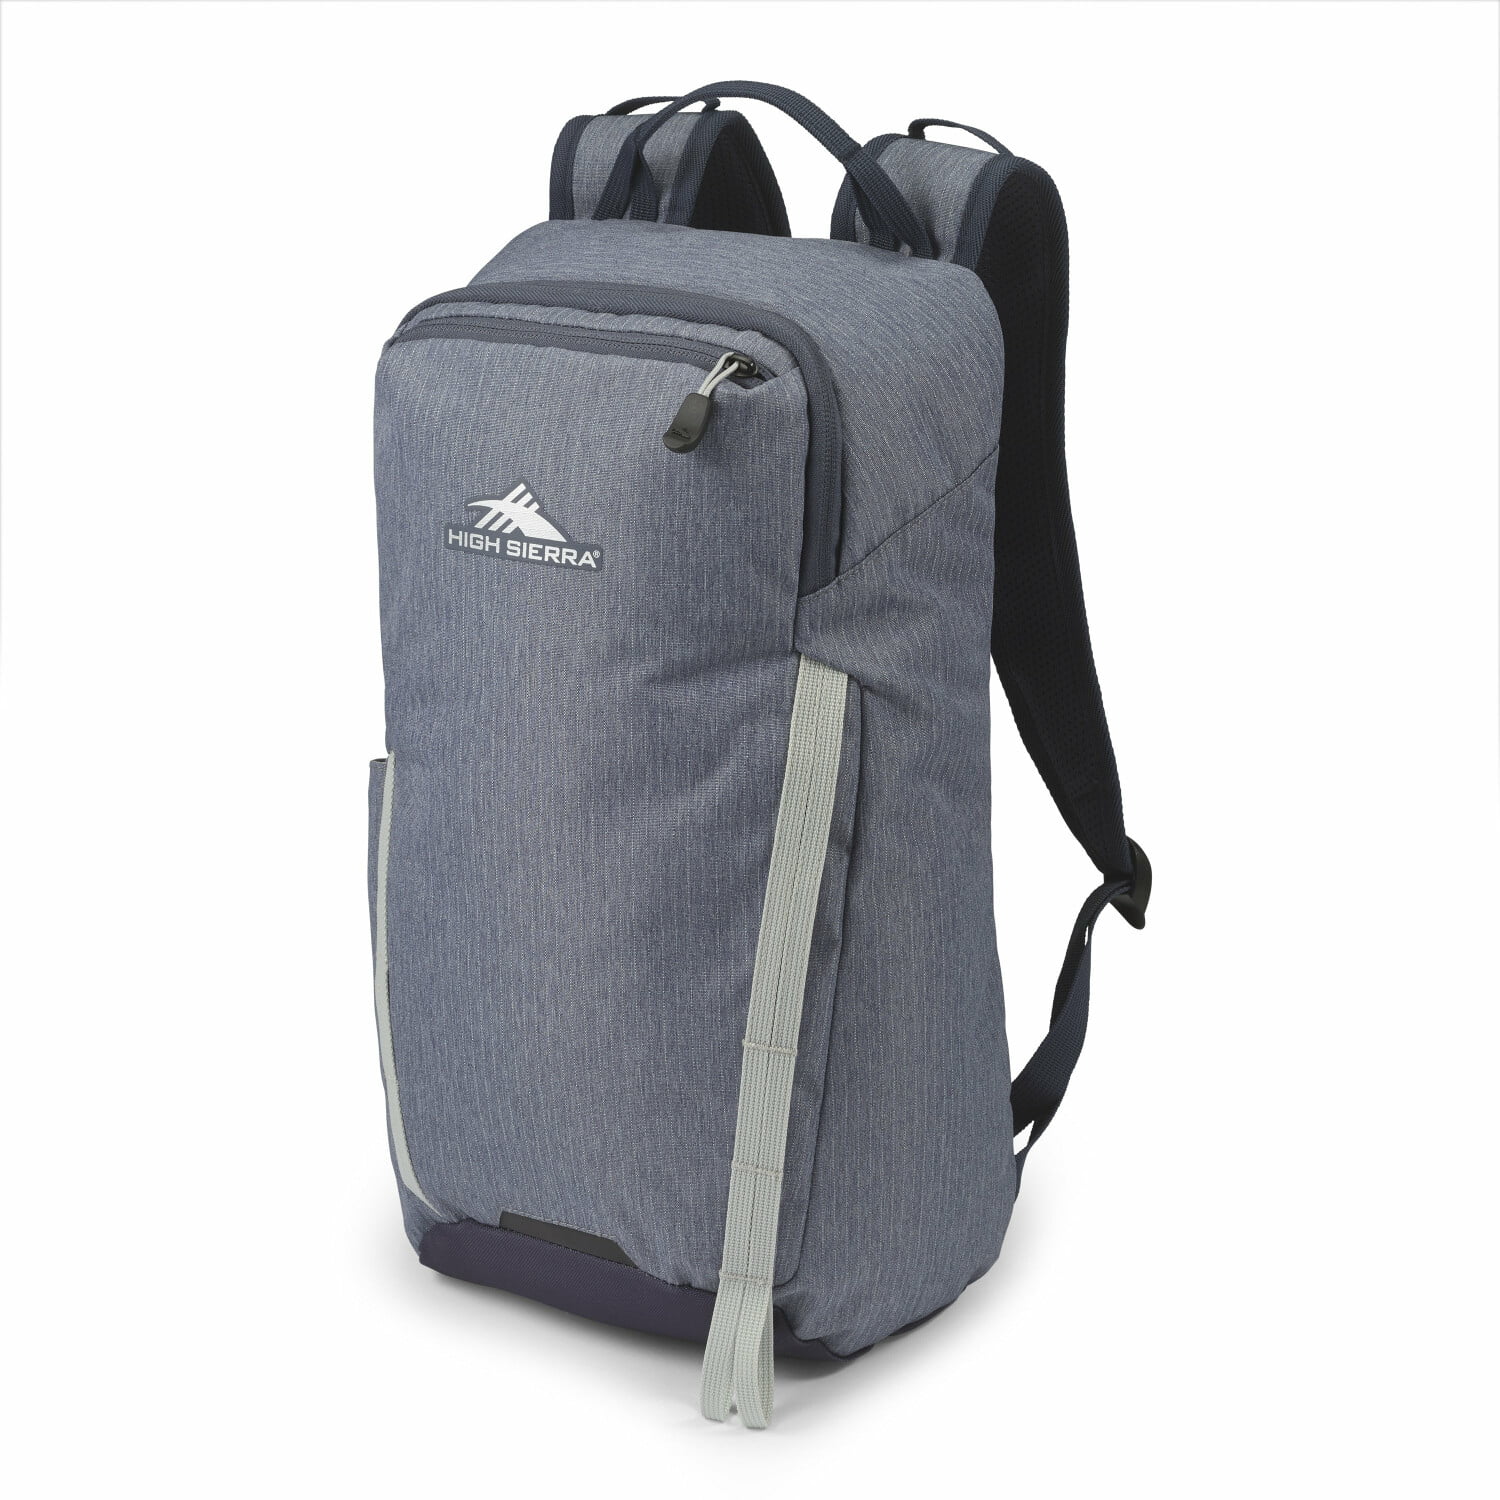 Butterfly Adult Casual Travel Daypack Printed Backpacks Oxford Superbreak Backpack Slim Laptop Schoolbag 